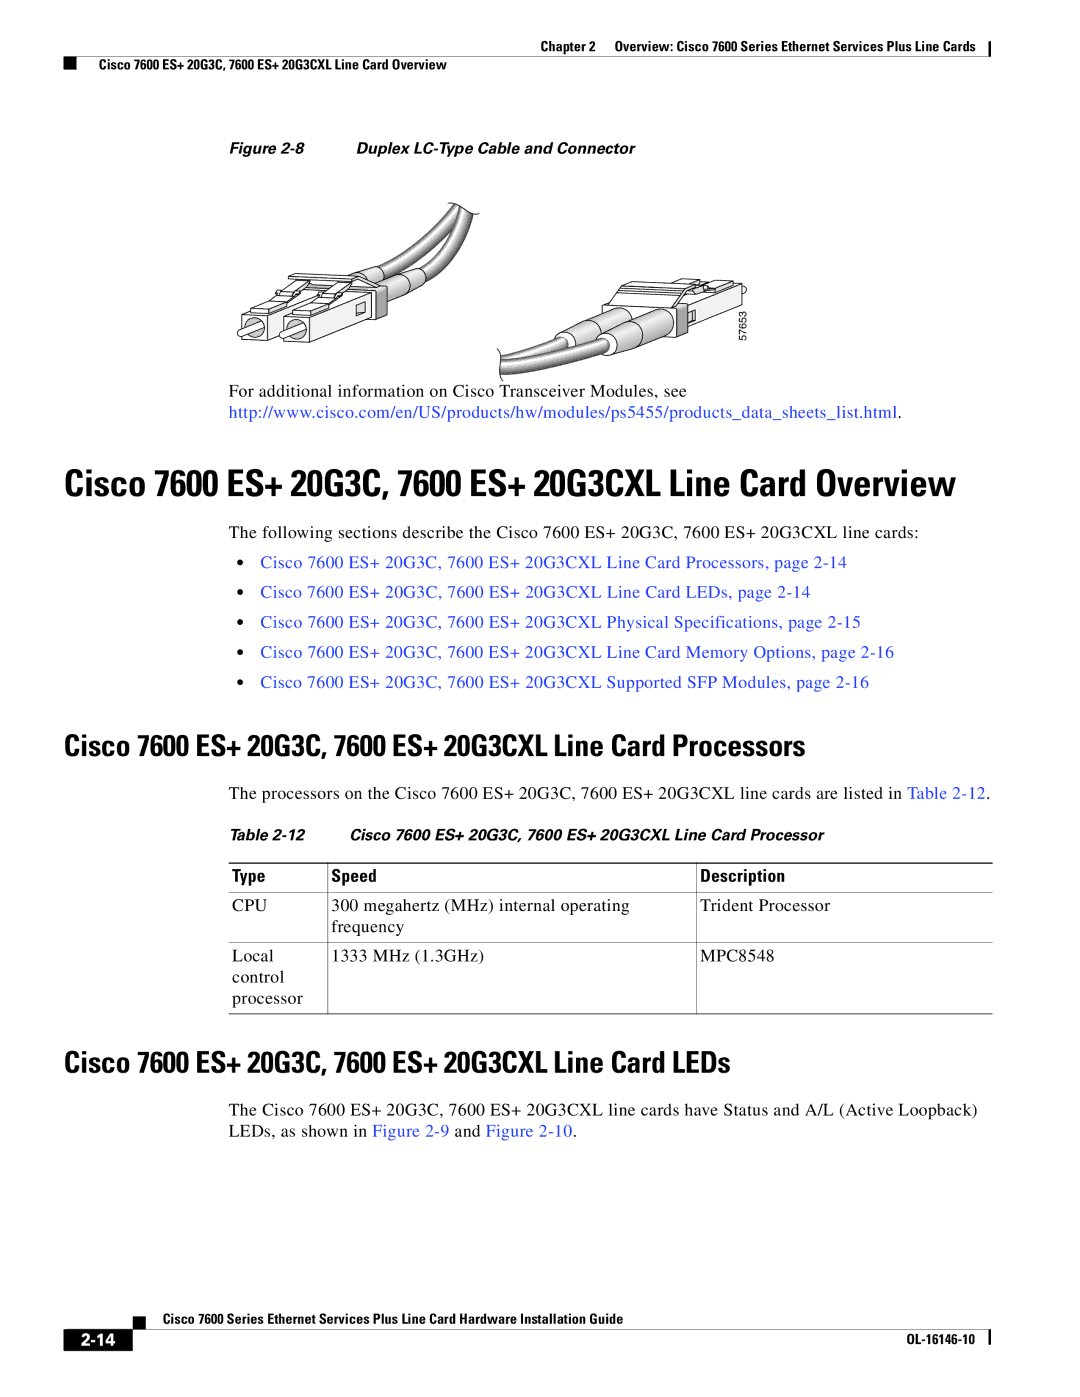 Cisco Systems OL-16146-10 manual Cisco 7600 ES+ 20G3C, 7600 ES+ 20G3CXL Line Card Processors 